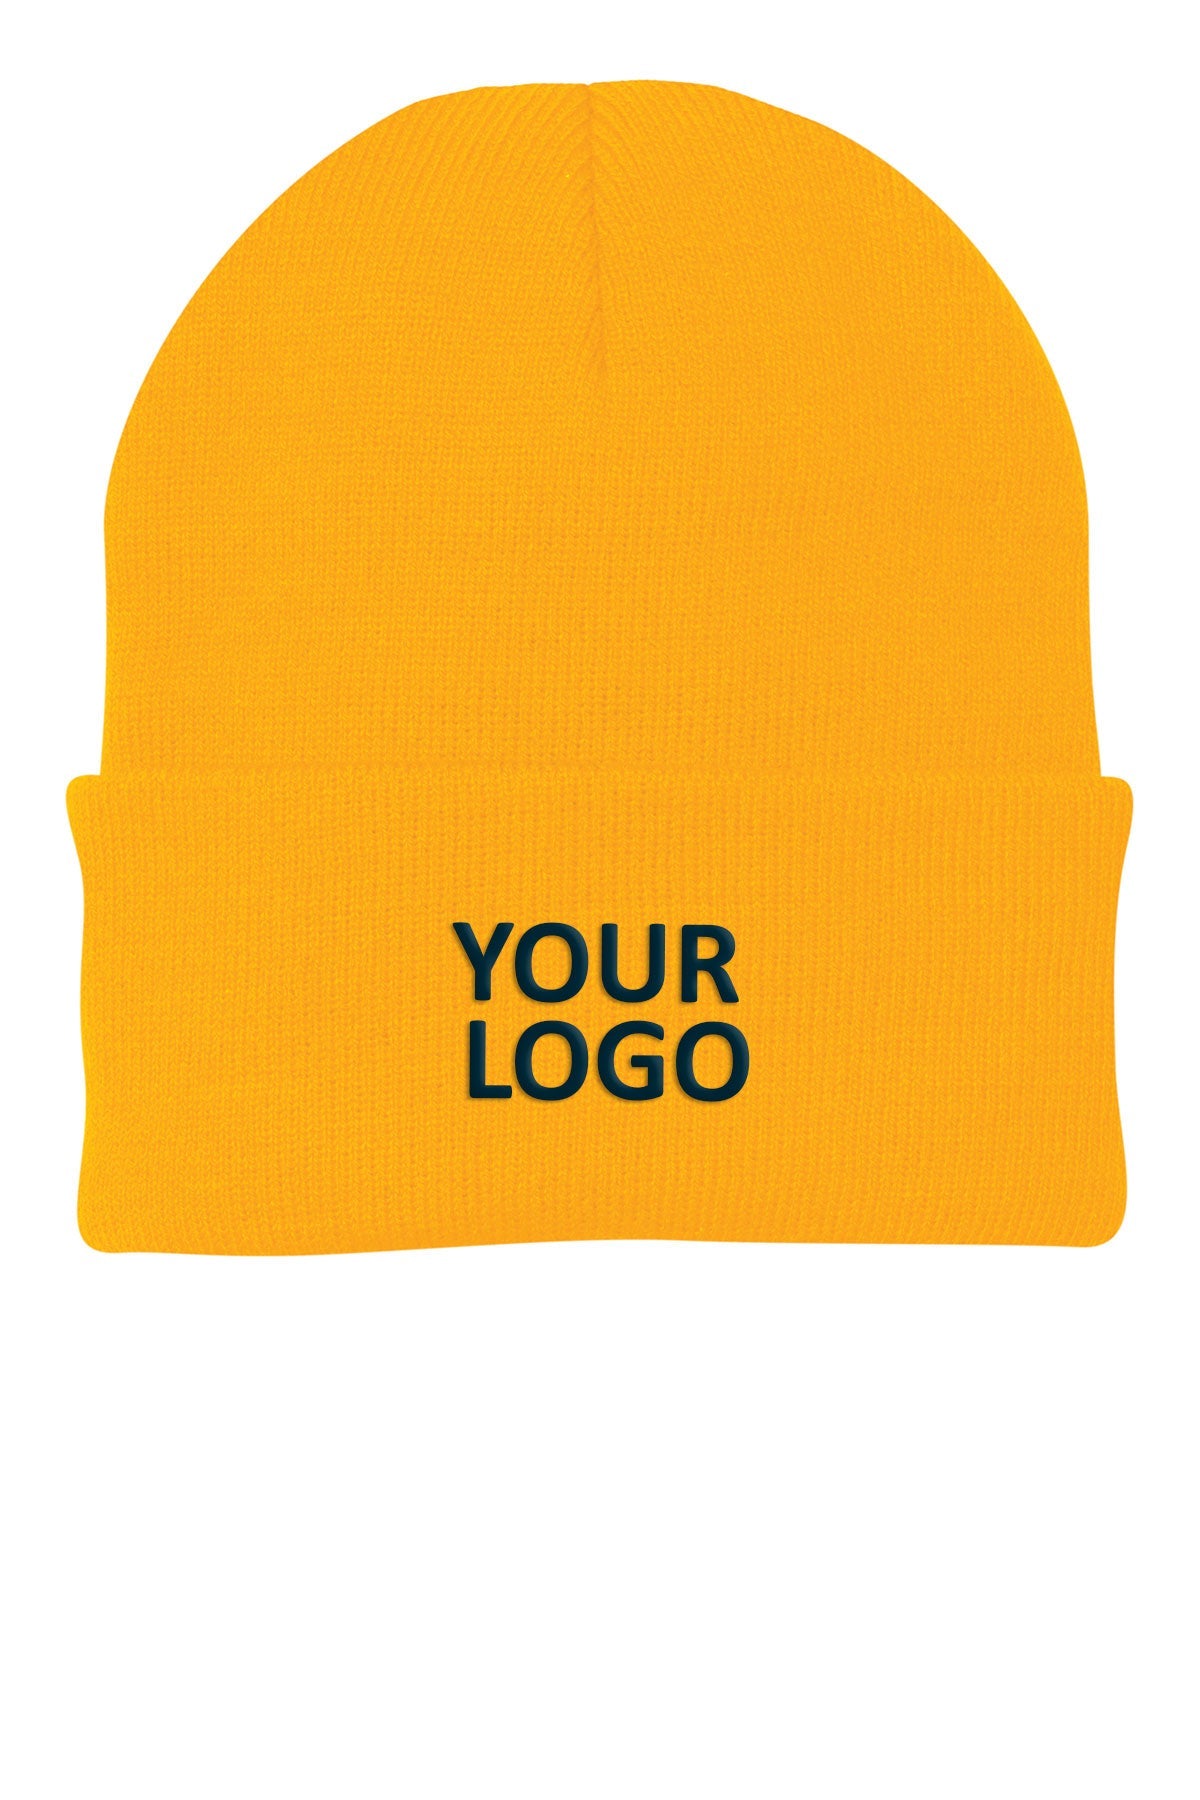 Port & Company Customized Knit Caps, Gold